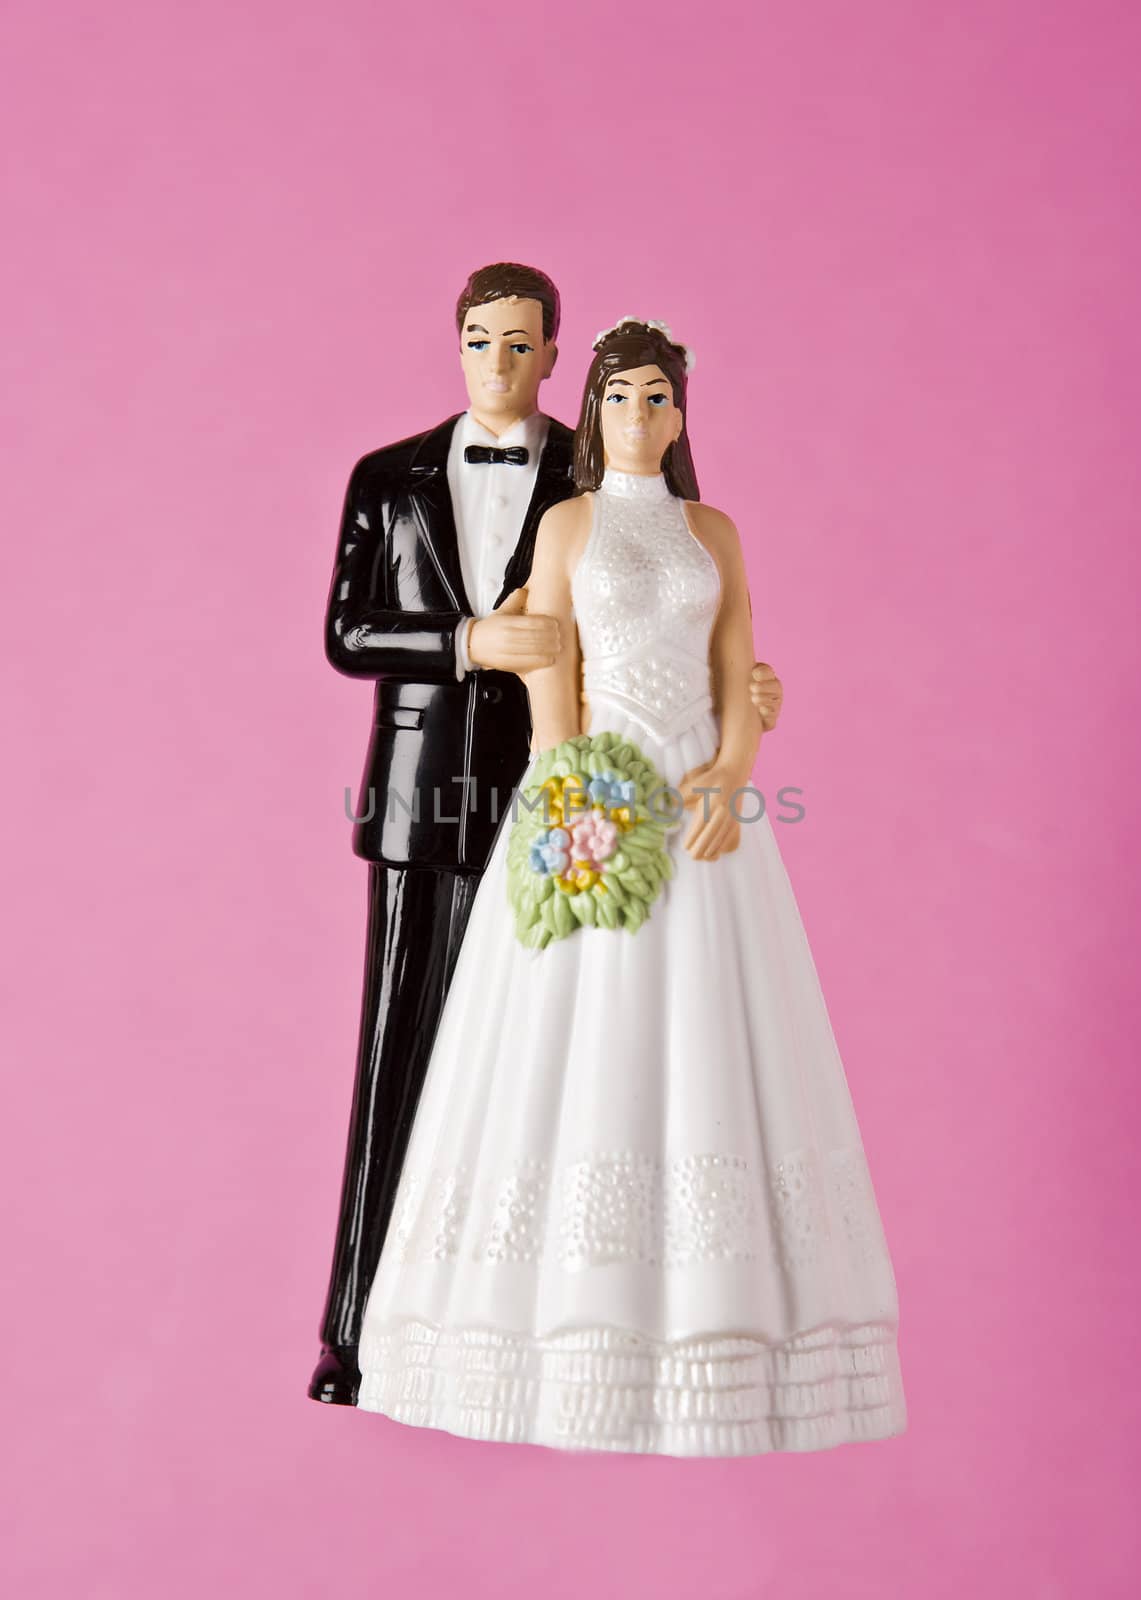 Wedding Figurines towards pink background